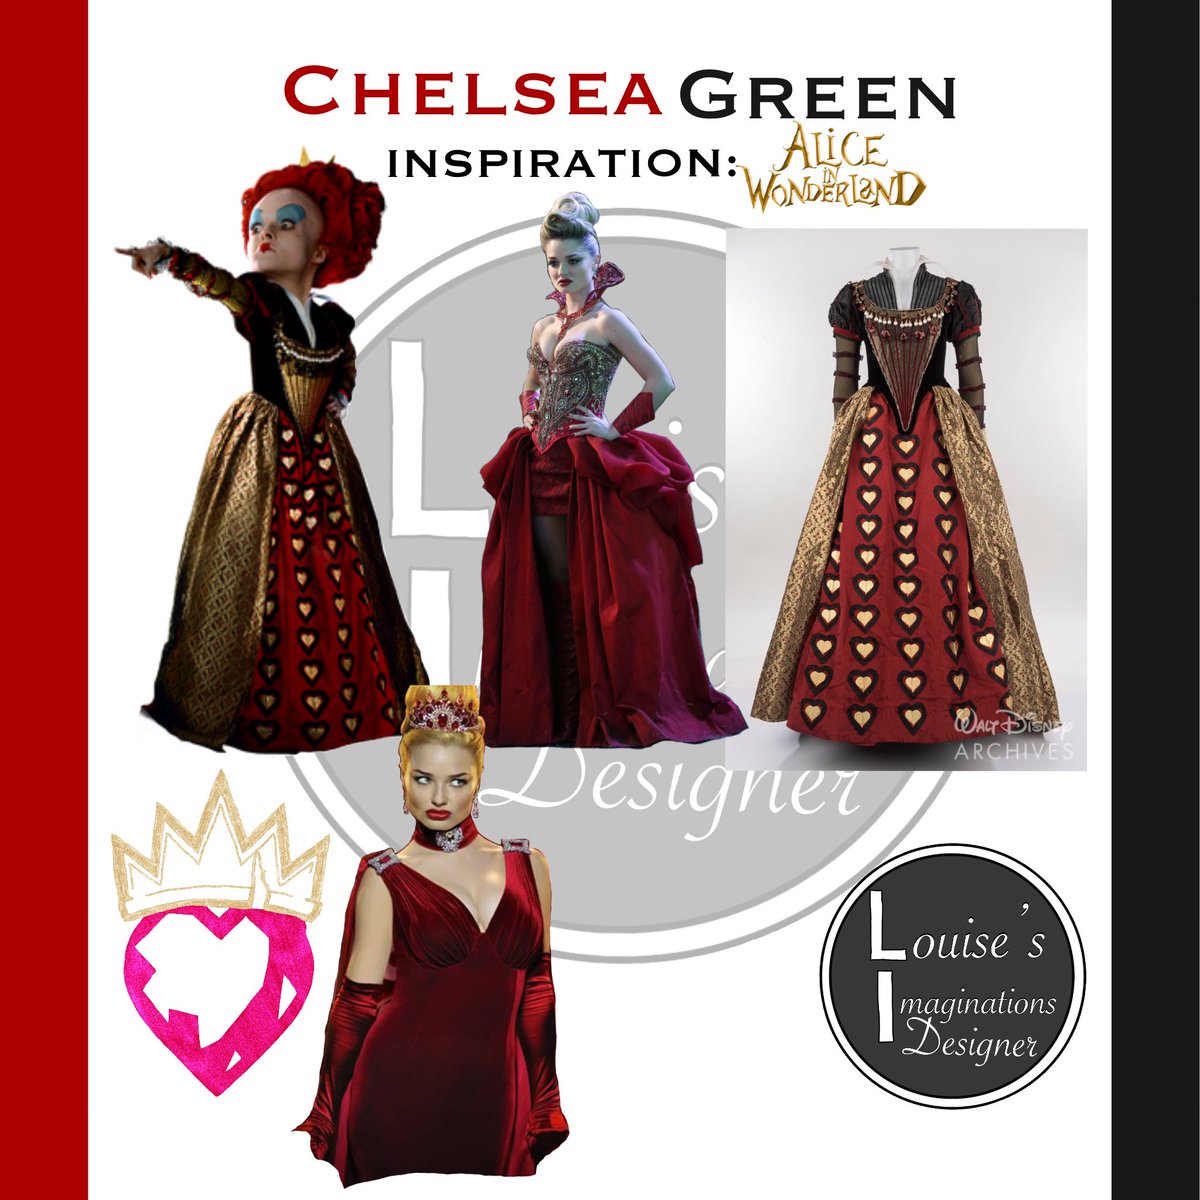 Here’s my new #FanArt custom gear for @ImChelseaGreen (a Red Queen inspired) #aliceinwonderland #alicethroughthelookingglass #OnceUponATimeInWonderland